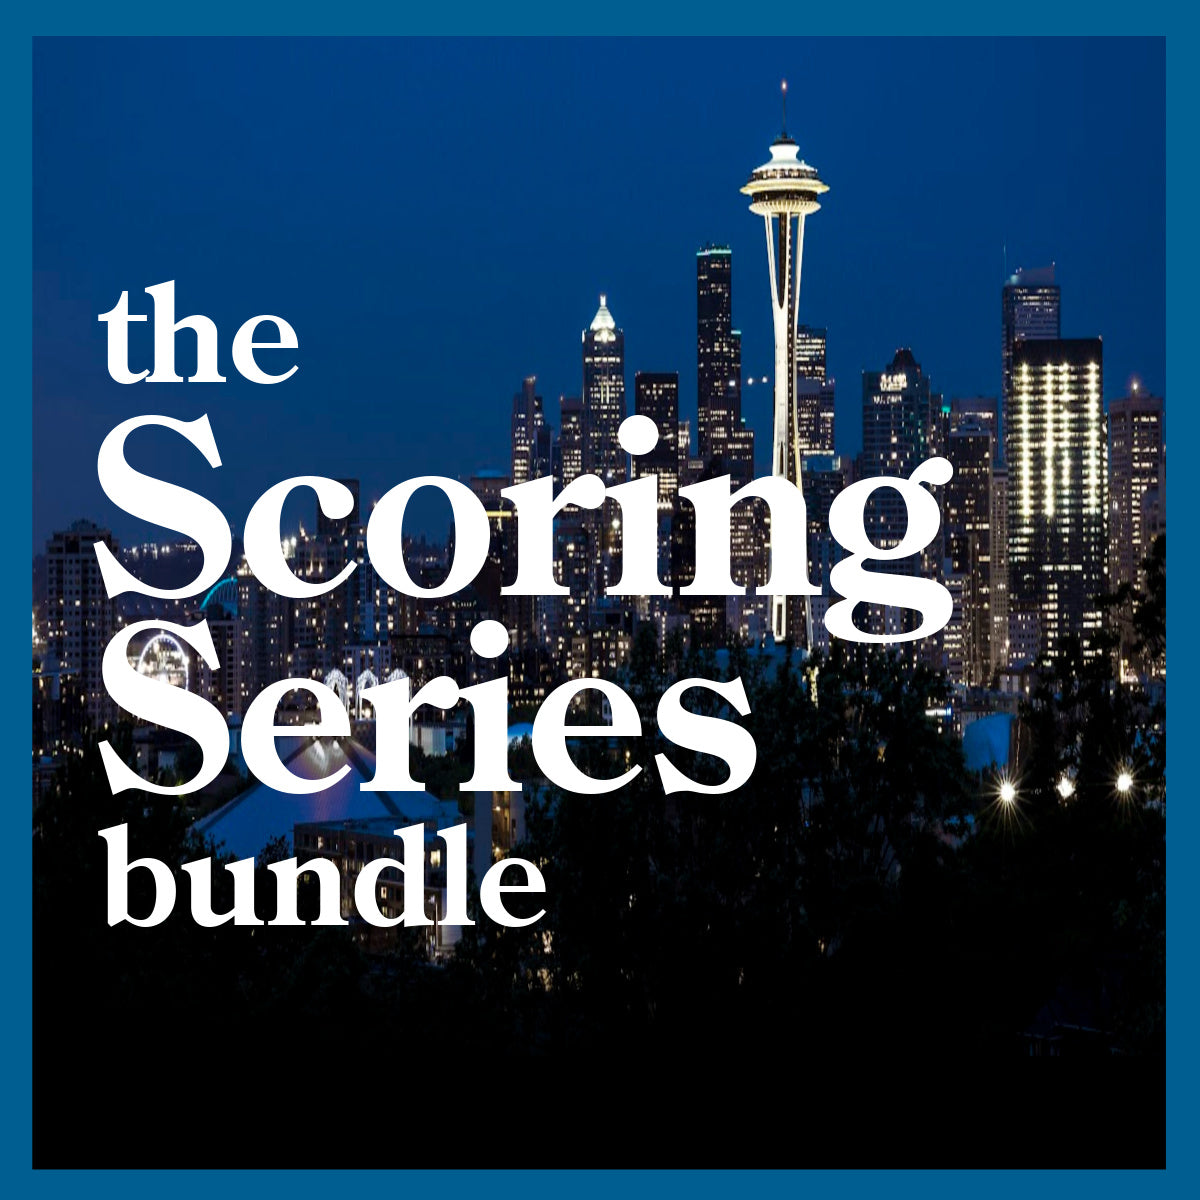 The Scoring Series, Books 1-3